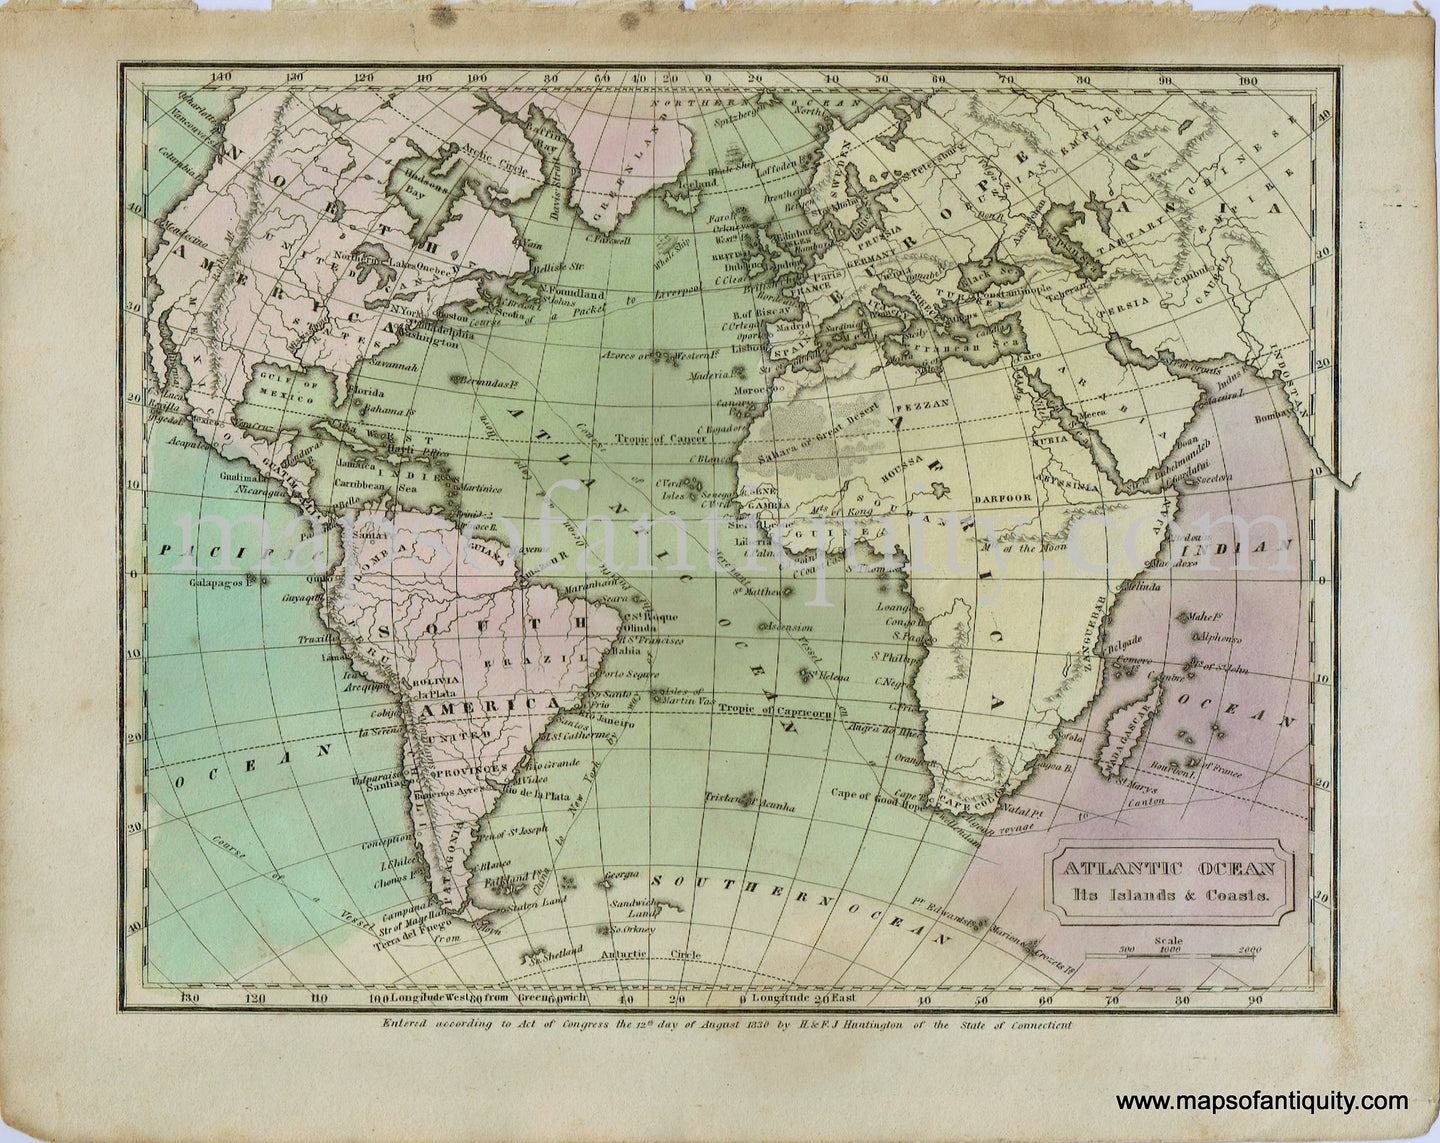 Antique-Map-World-Atlantic-Ocean-Its-Islands-&-Coasts-1830-Malte-Brun-Maps-of-Antiquity